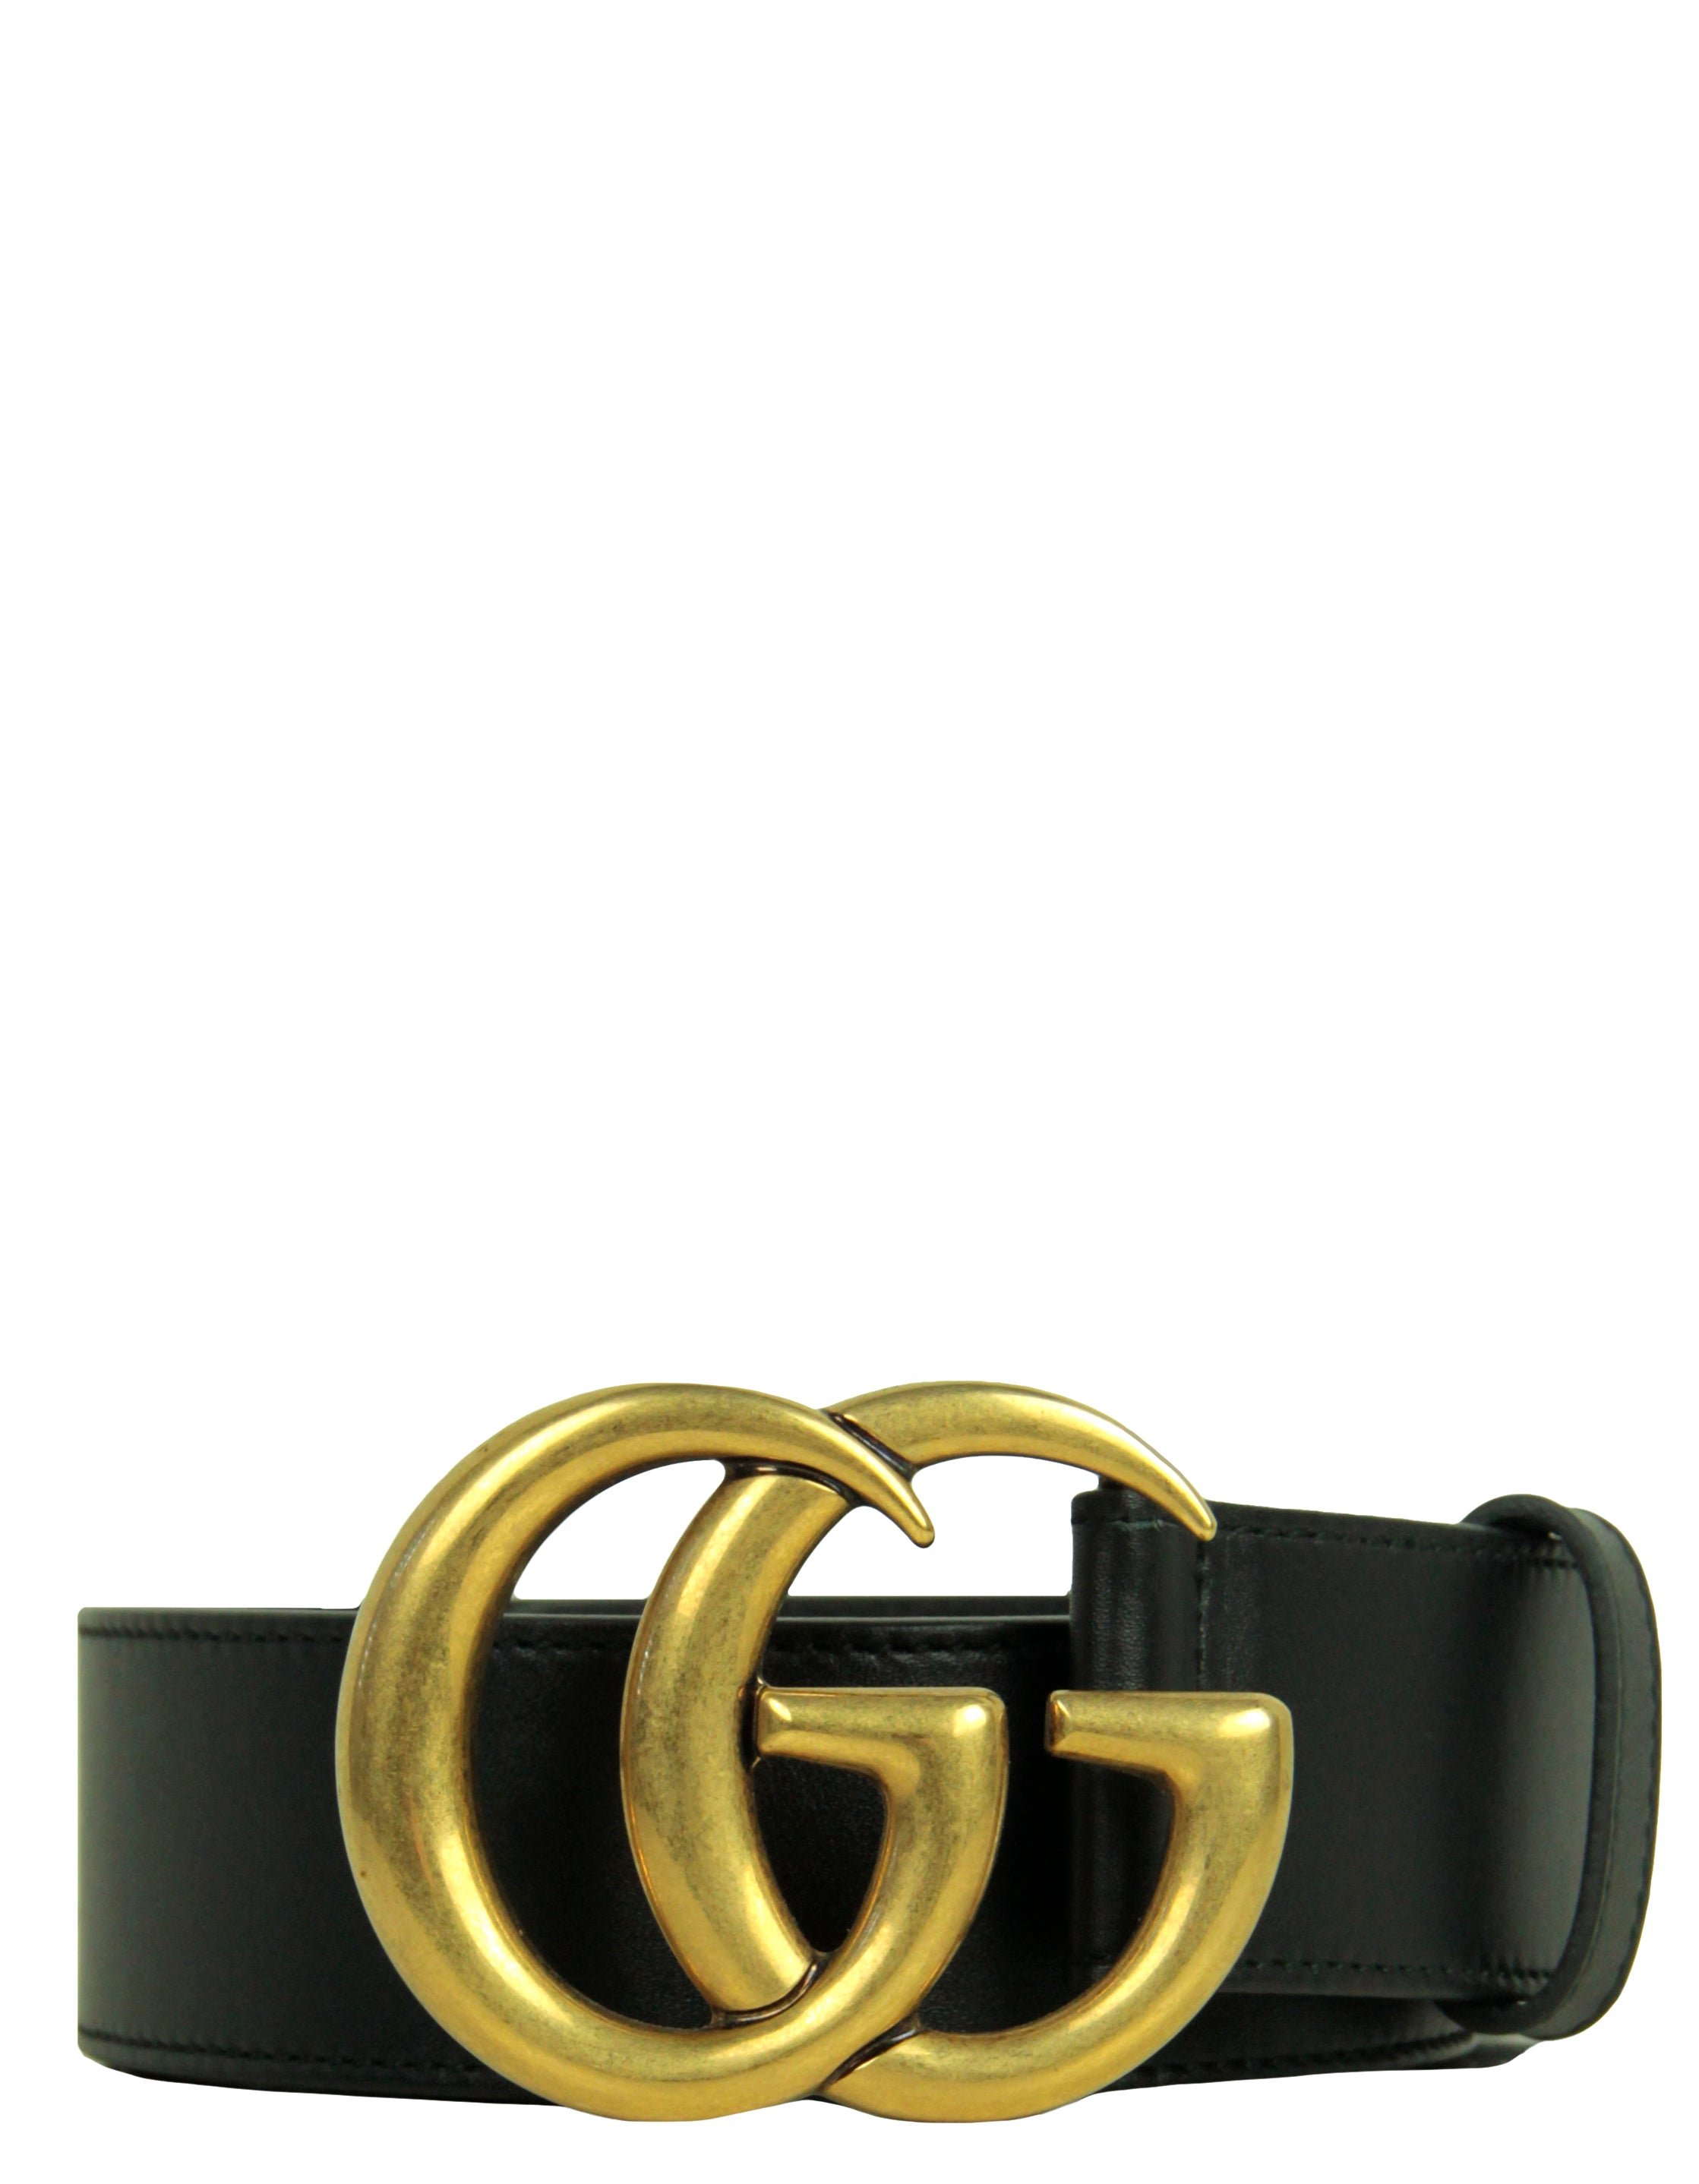 Gucci Black/Gold 40mm Wide Leather Marmont Belt sz 85